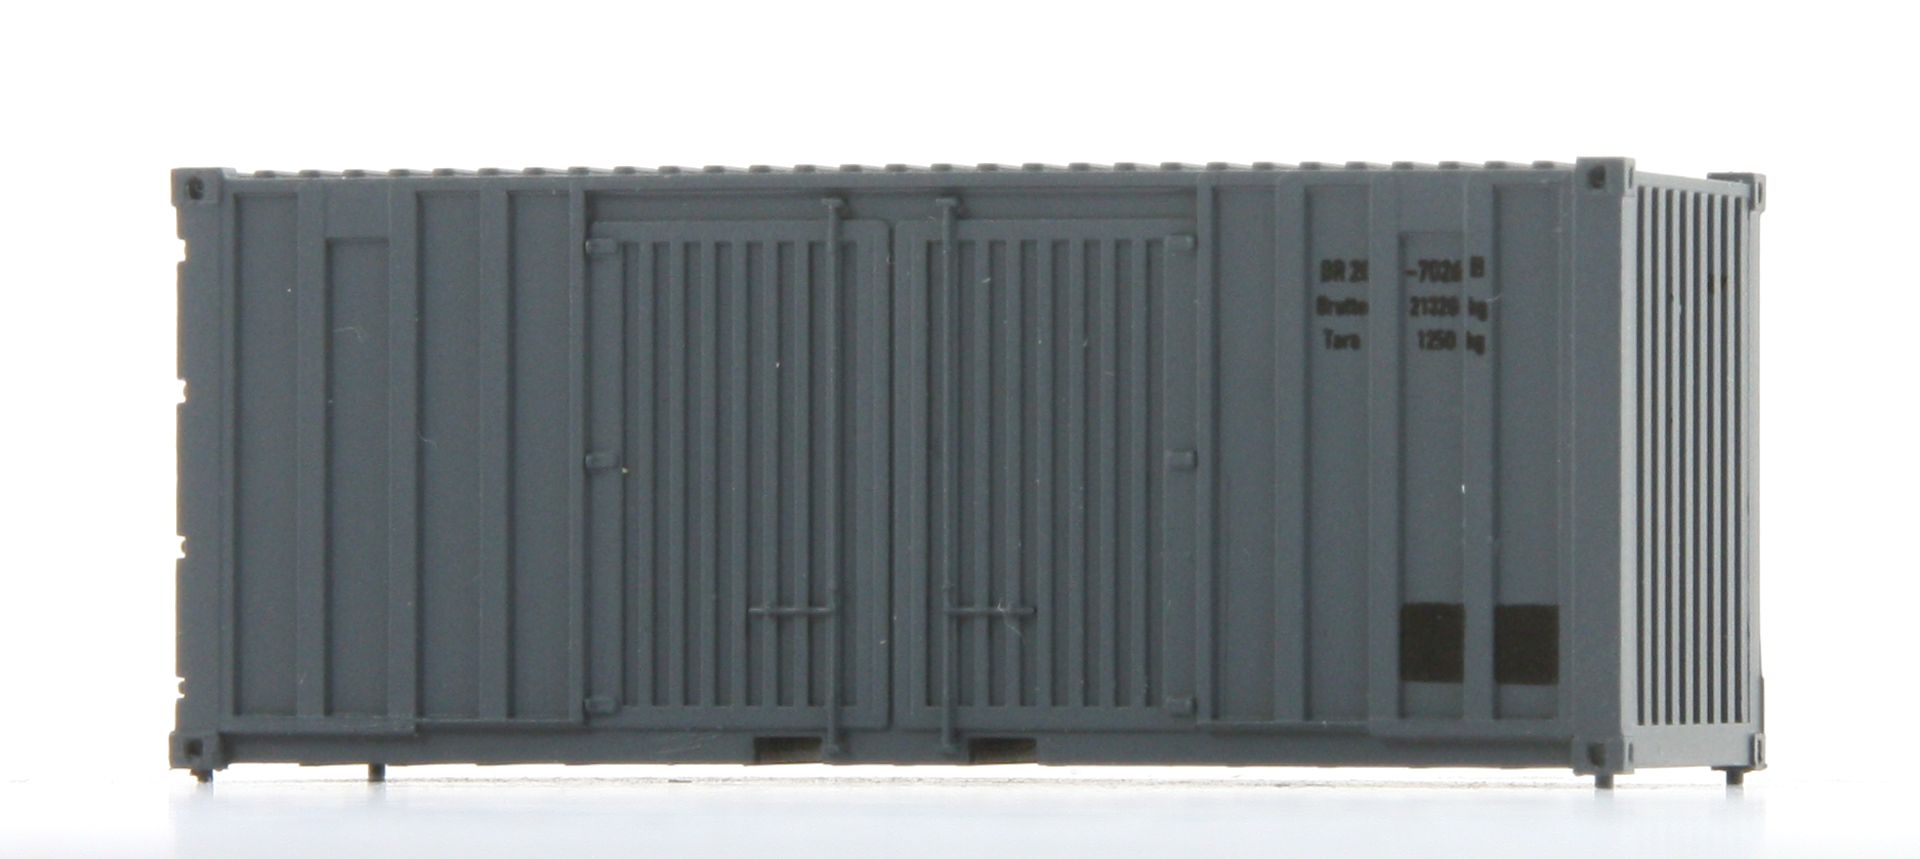 Hädl 711002-09 - 20 Fuß Postcontainer, grau, DR